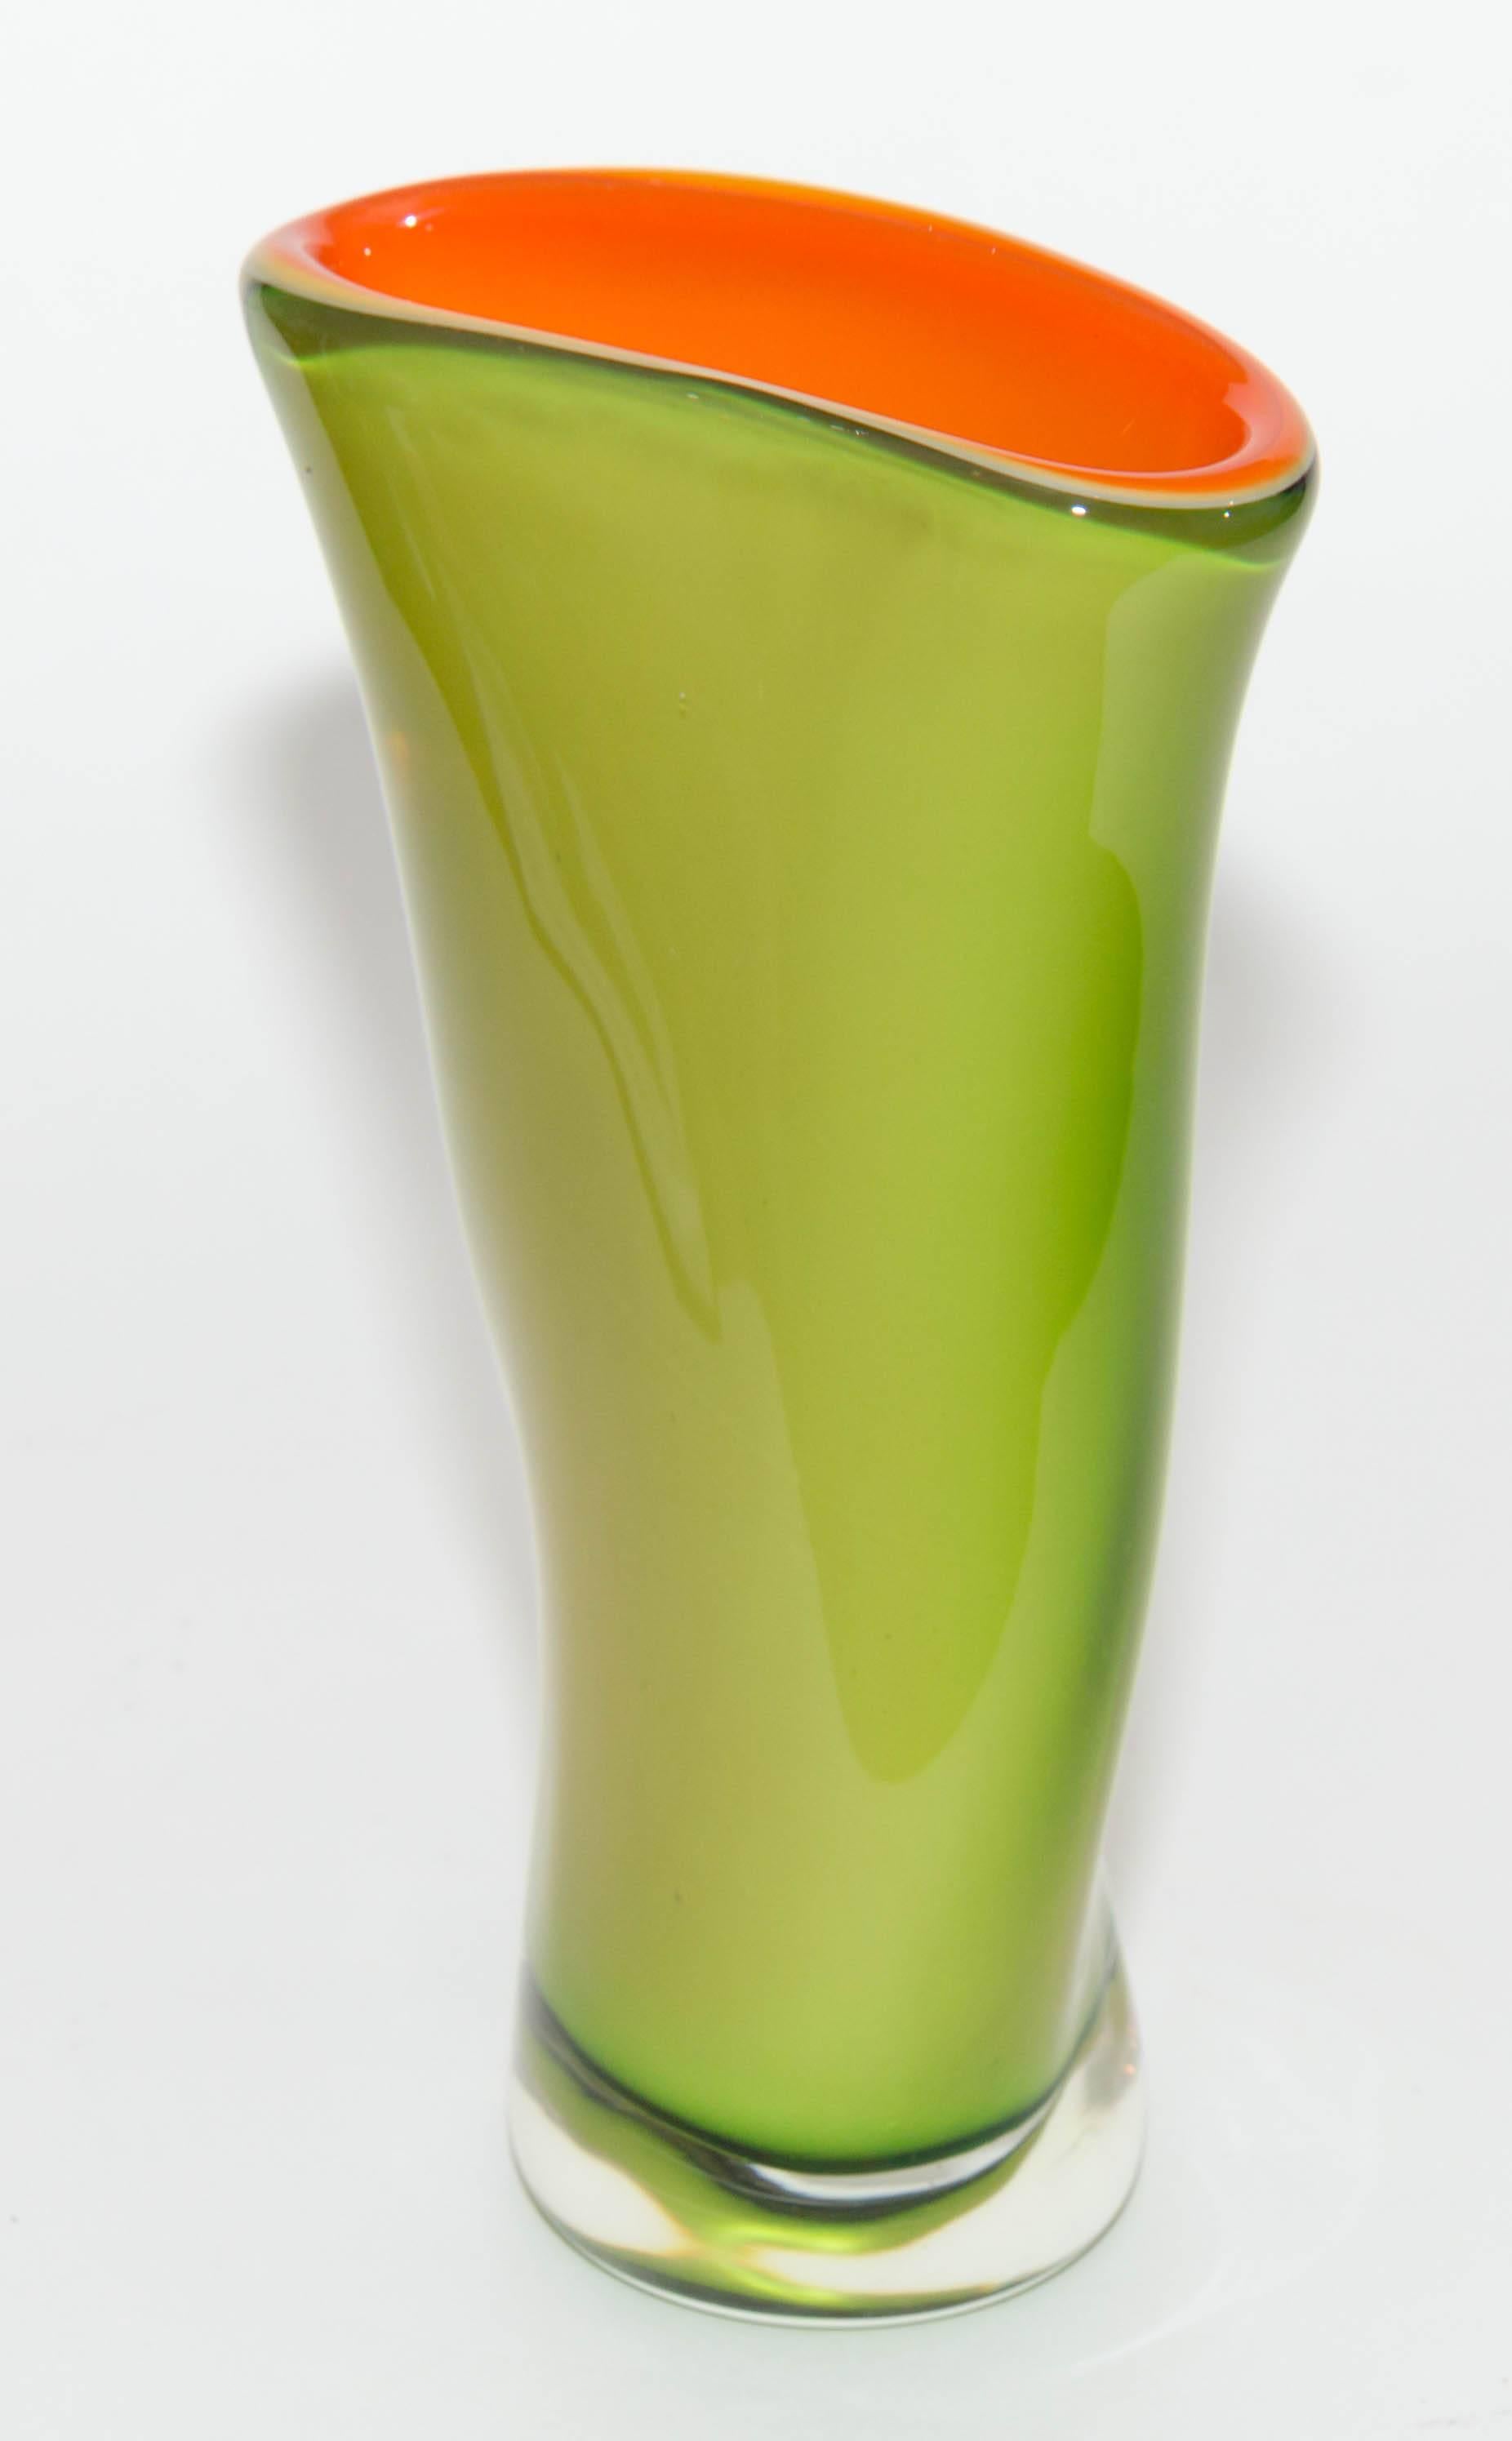 Green and orange asymmetrical Murano glass vase.